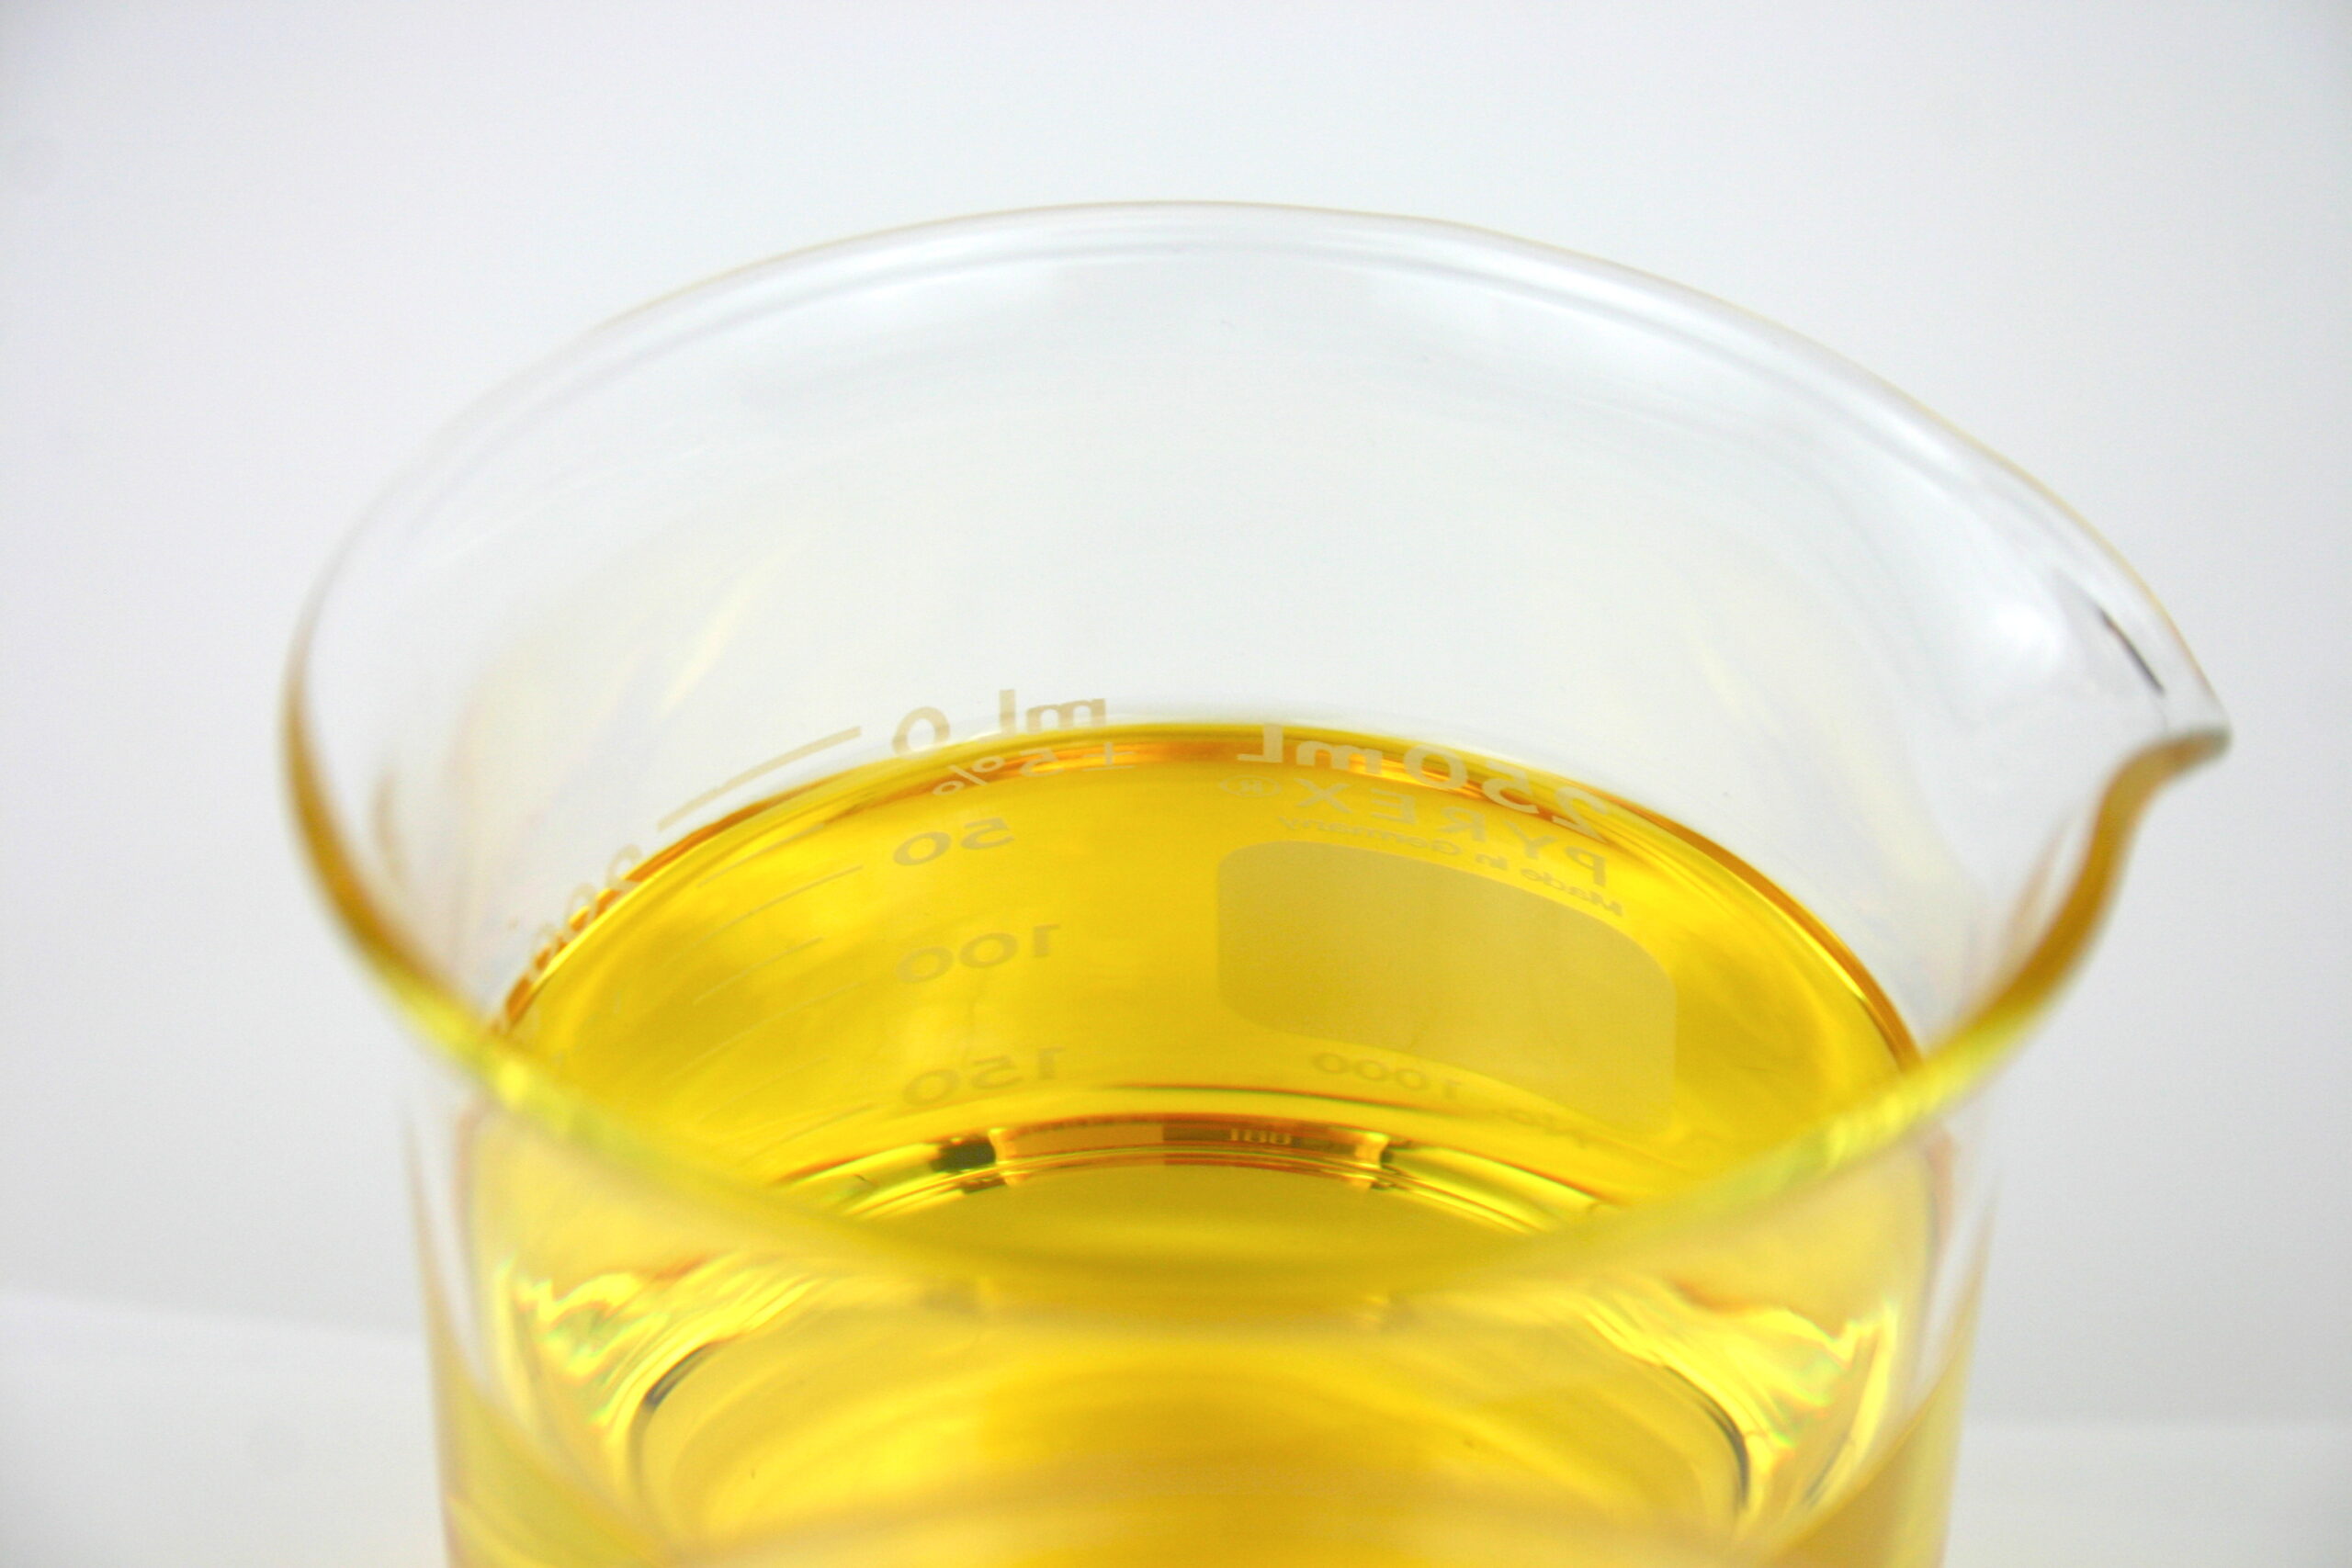 AlaskOmega® fish oil used to demonstrate importance of omega-3 DHA in childhood brain development